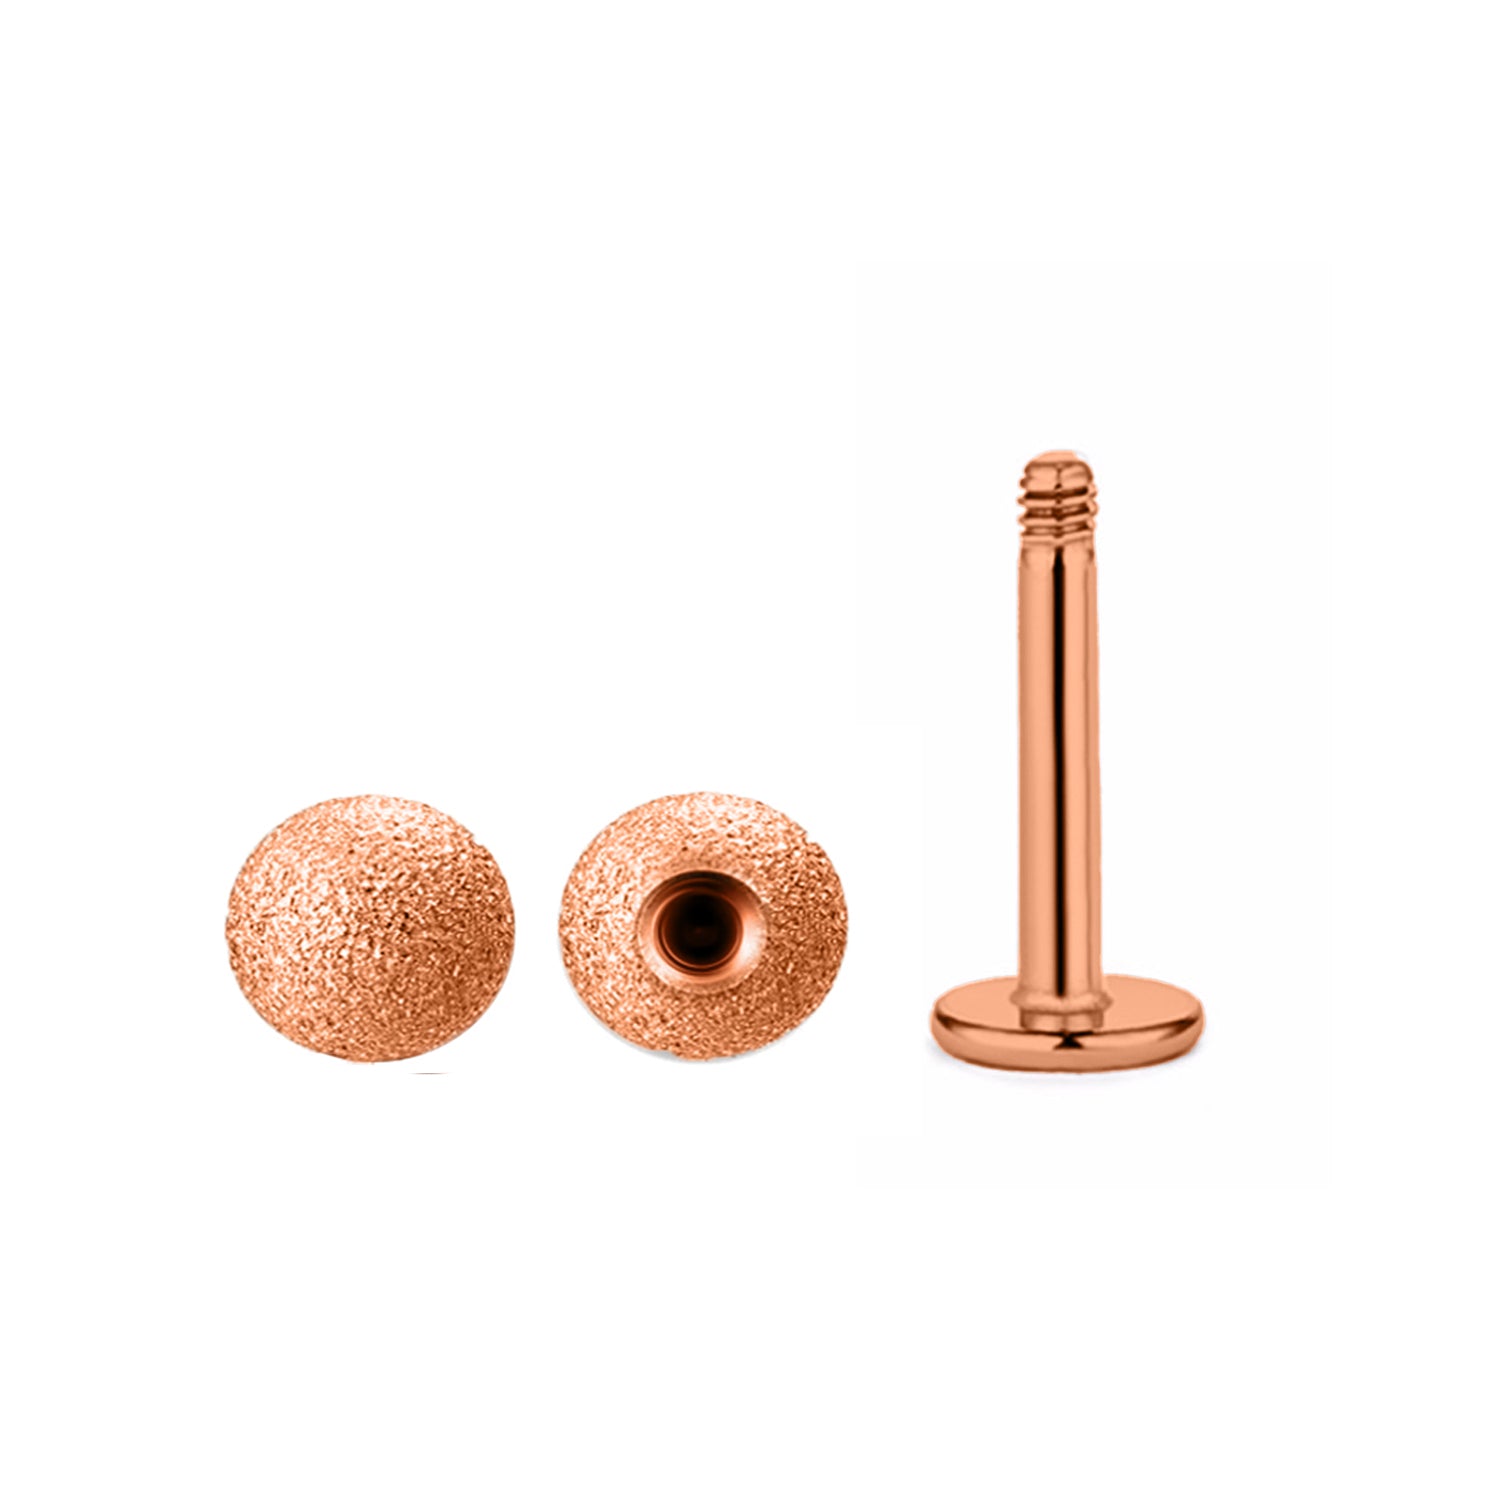 18K Rose Gold Steel Labret mit Kugel -Sandgestrahlt im Diamant Schliff-Design- Stärke 1.2mm